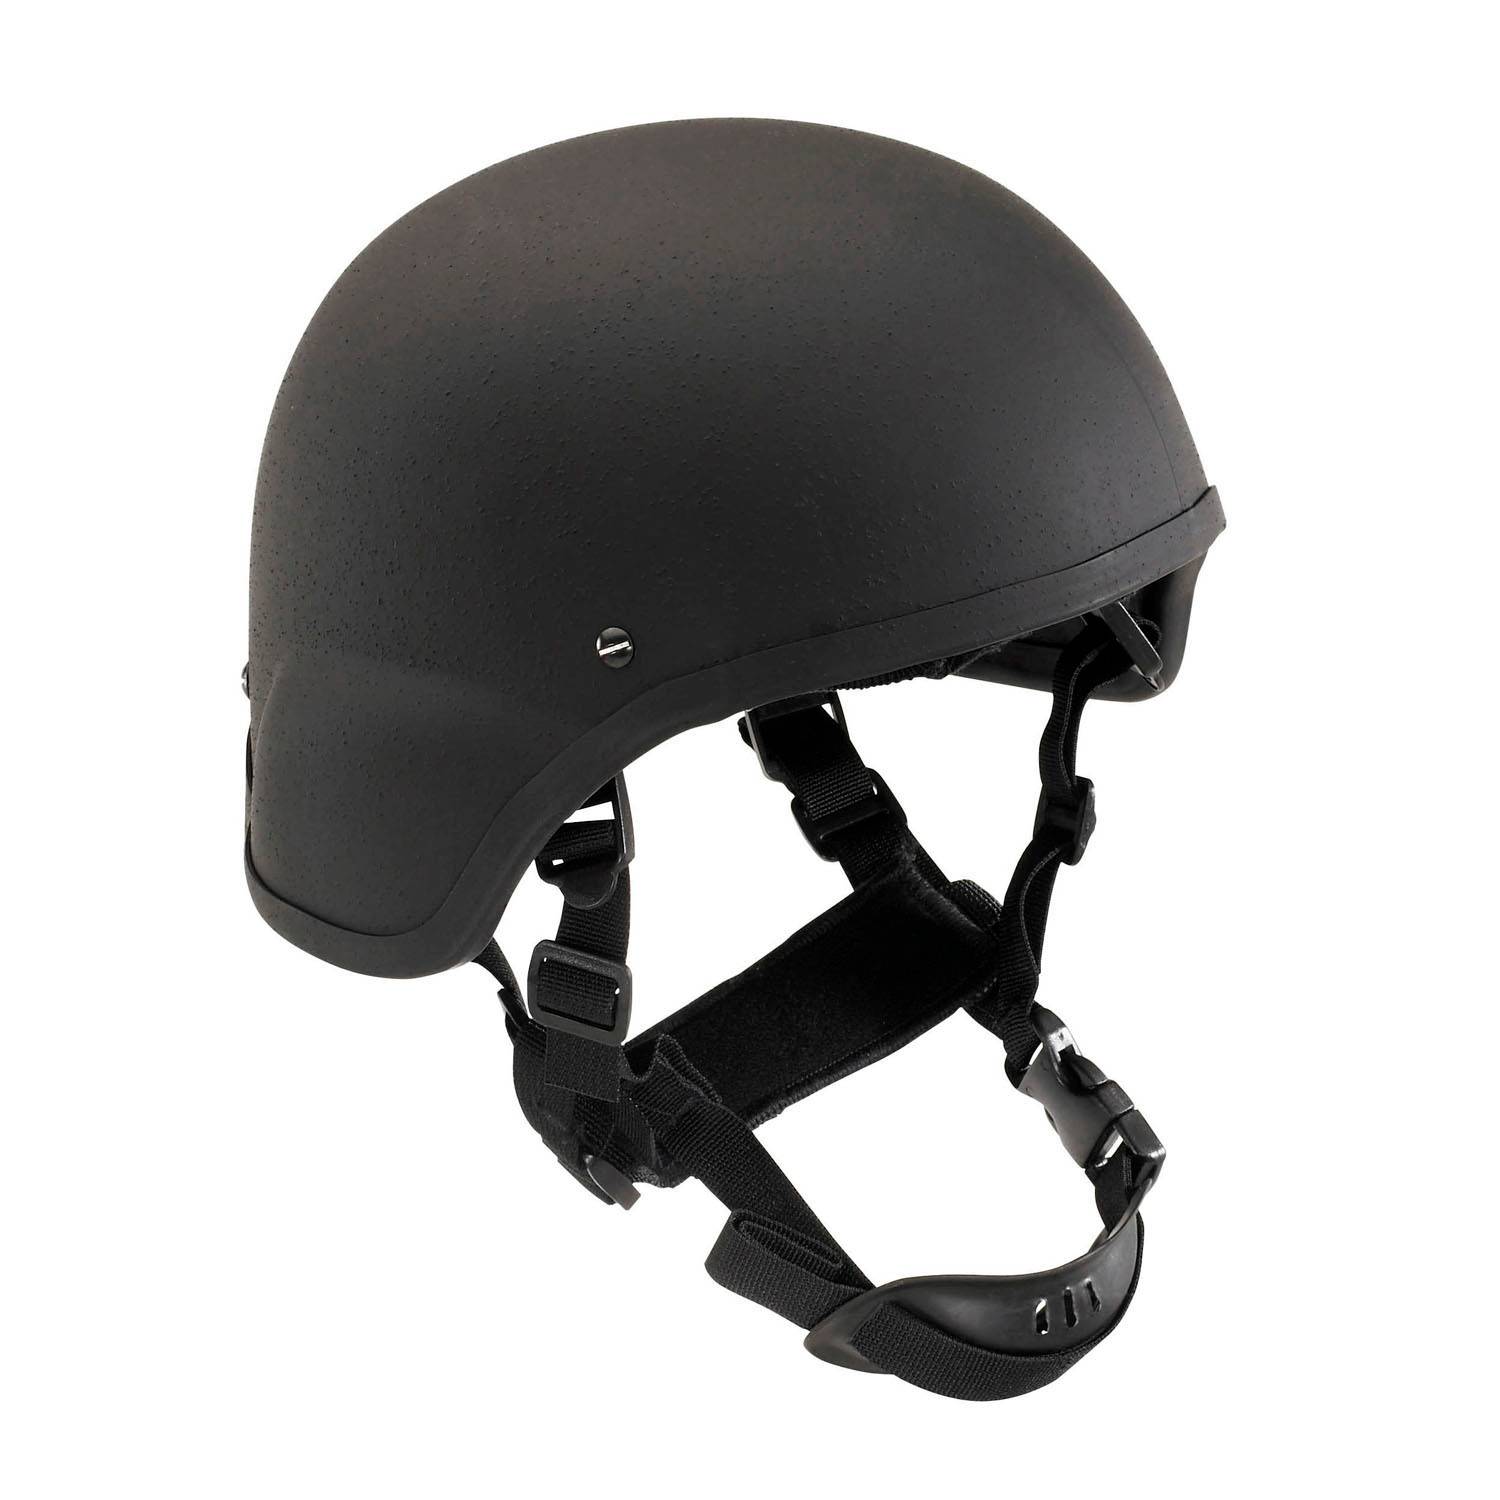 Avon Protection C105 Combat I MICH Ballistic Helmet